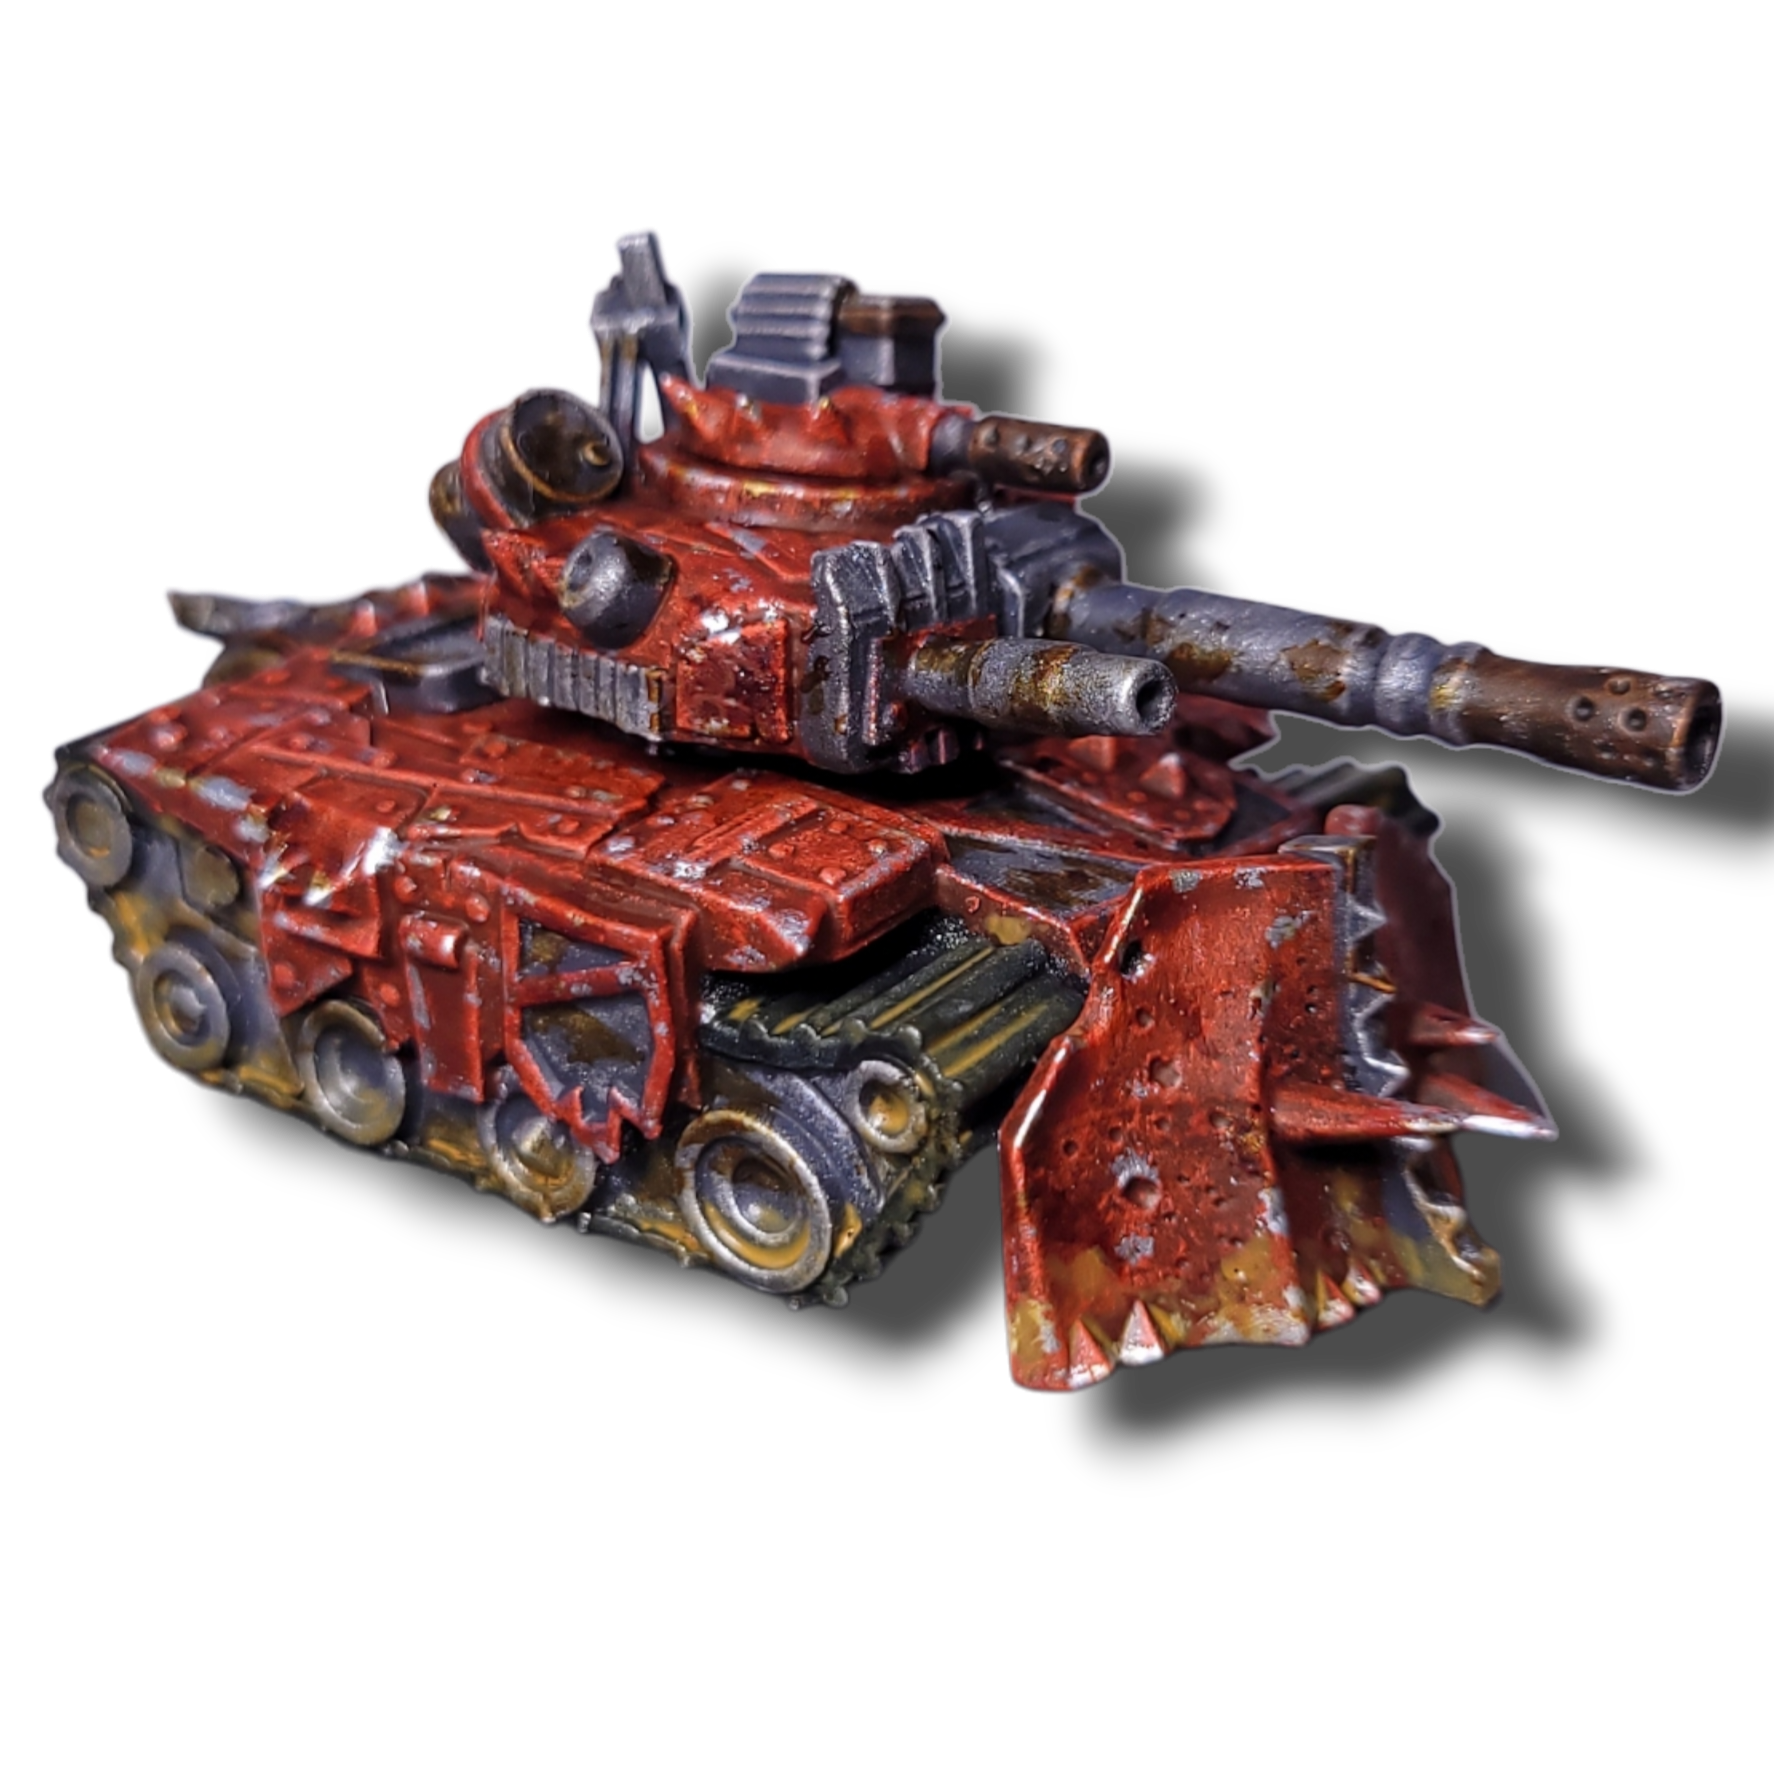 Raider Heavy Tank